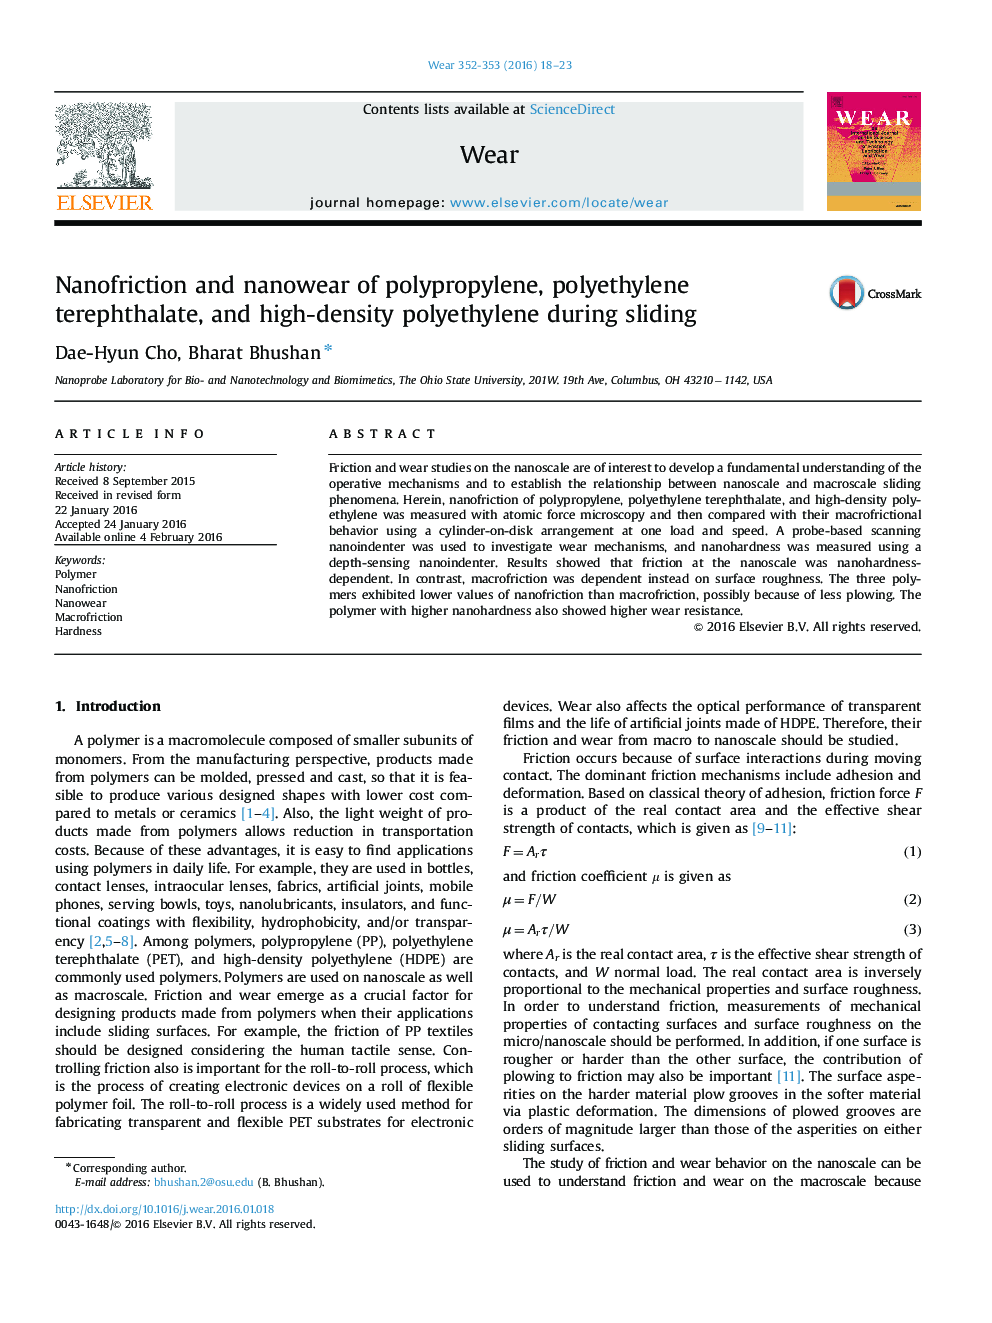 Nanofriction and nanowear of polypropylene, polyethylene terephthalate, and high-density polyethylene during sliding